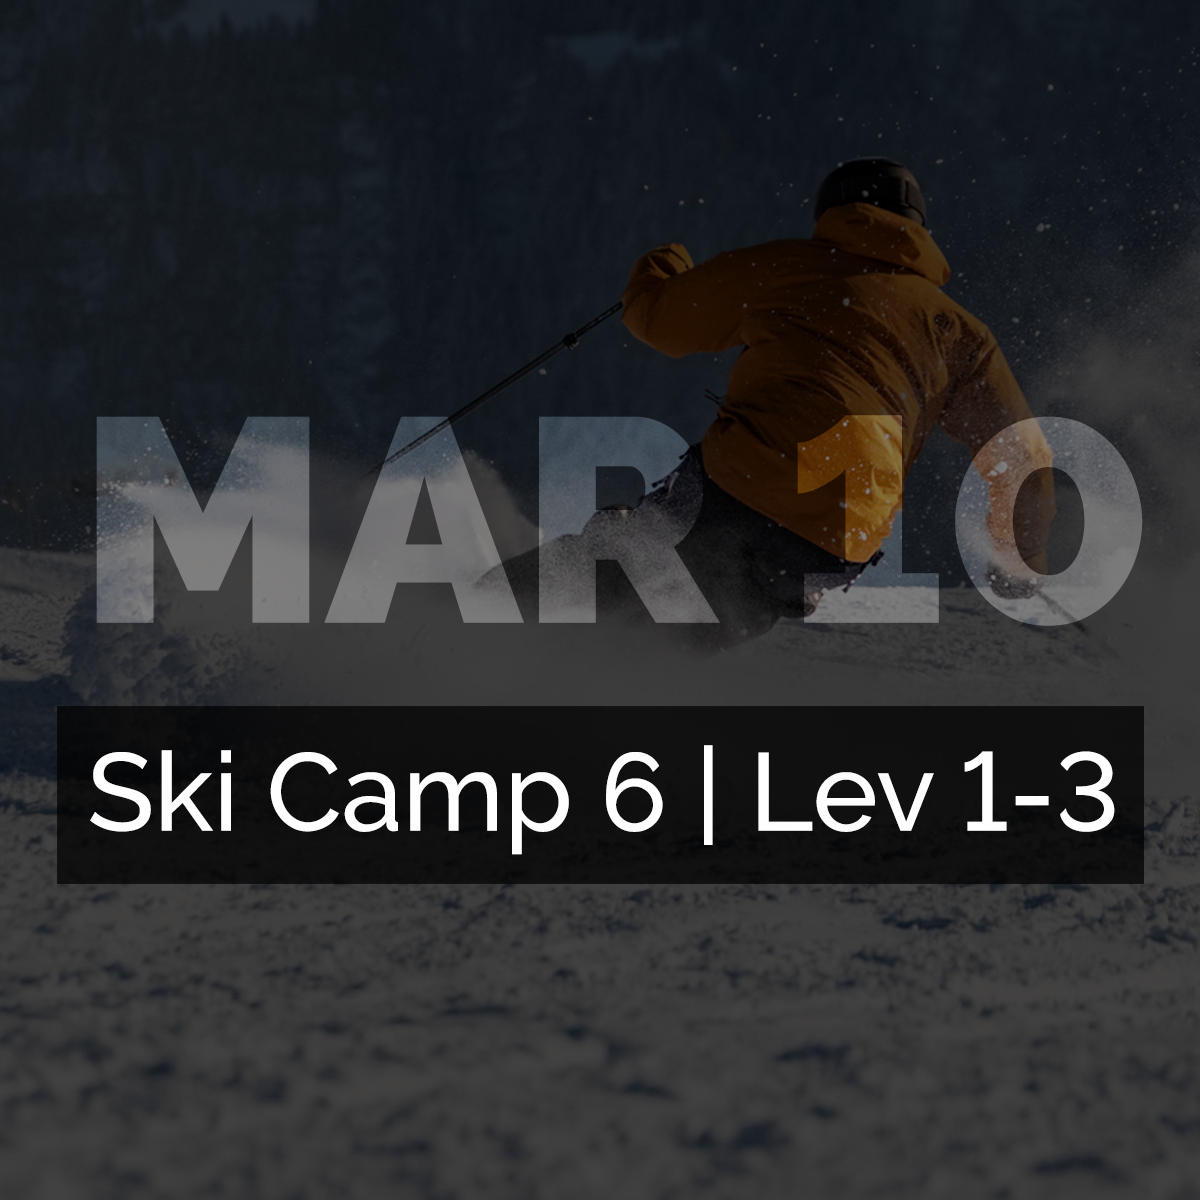 Laax Ski Camp 6 | Mar 10-16 |